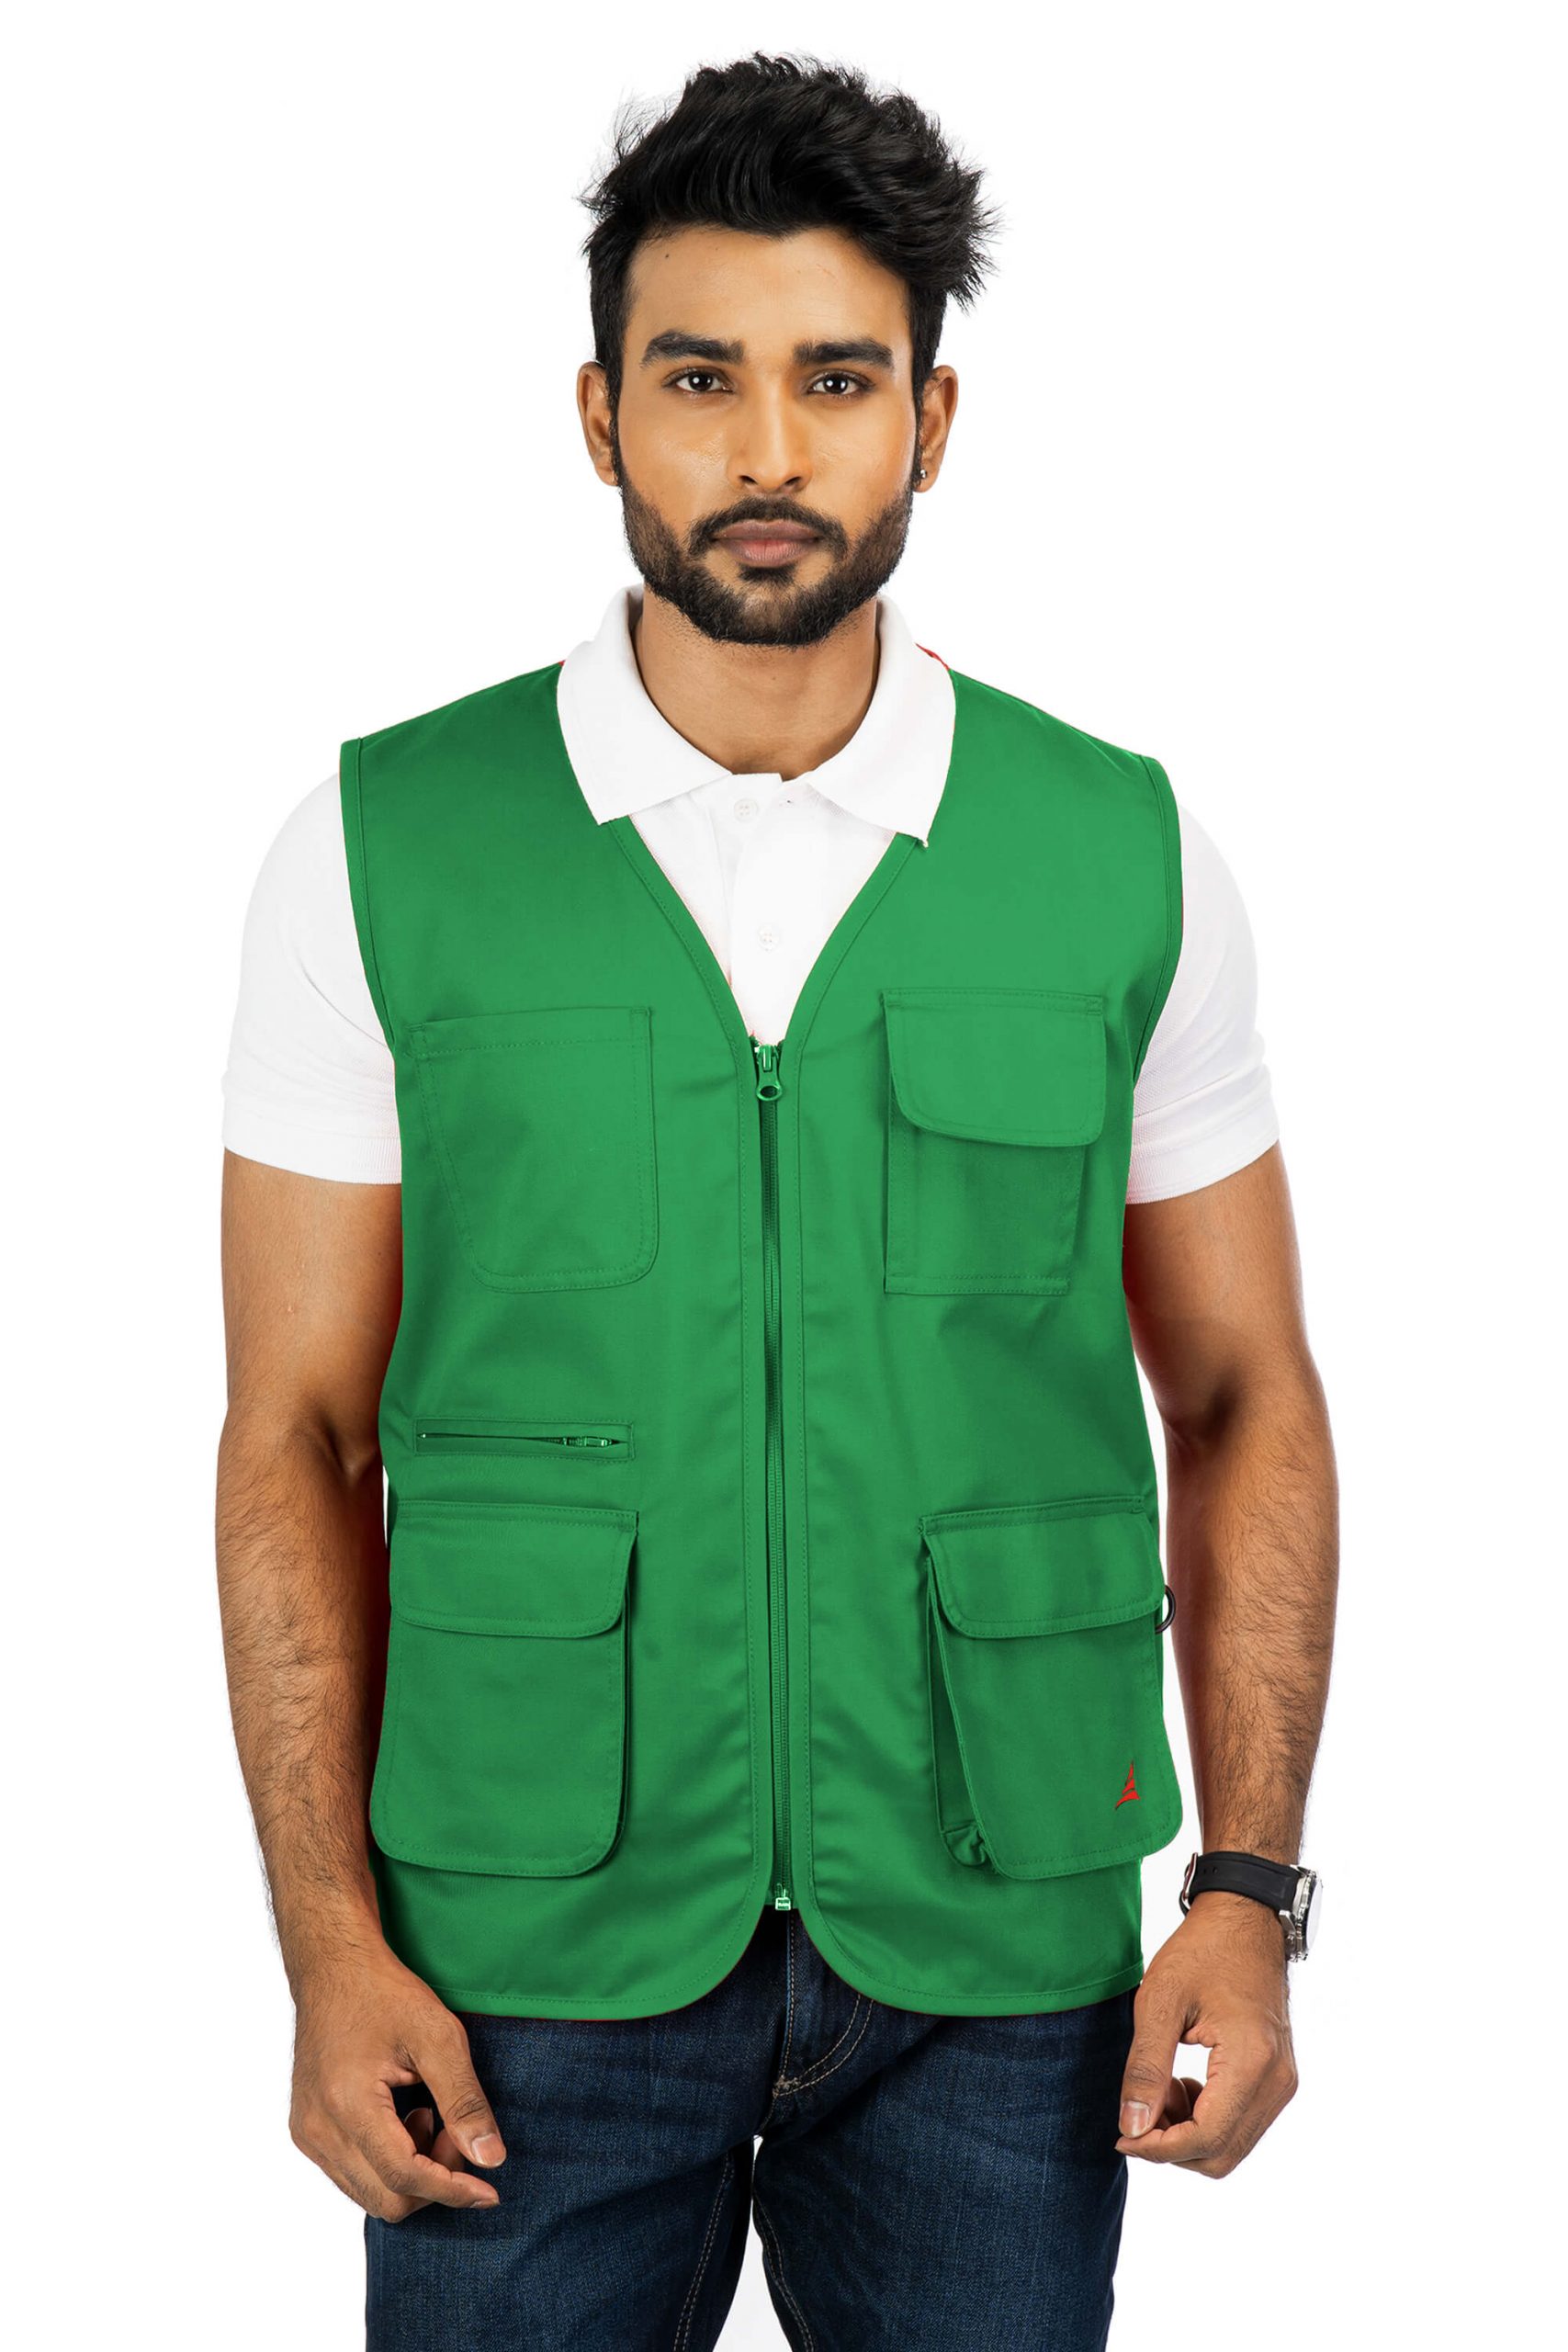 Stylised mid-torso bone pockets with concealed zips. An ergonomically designed multi-utility safari Green vest.